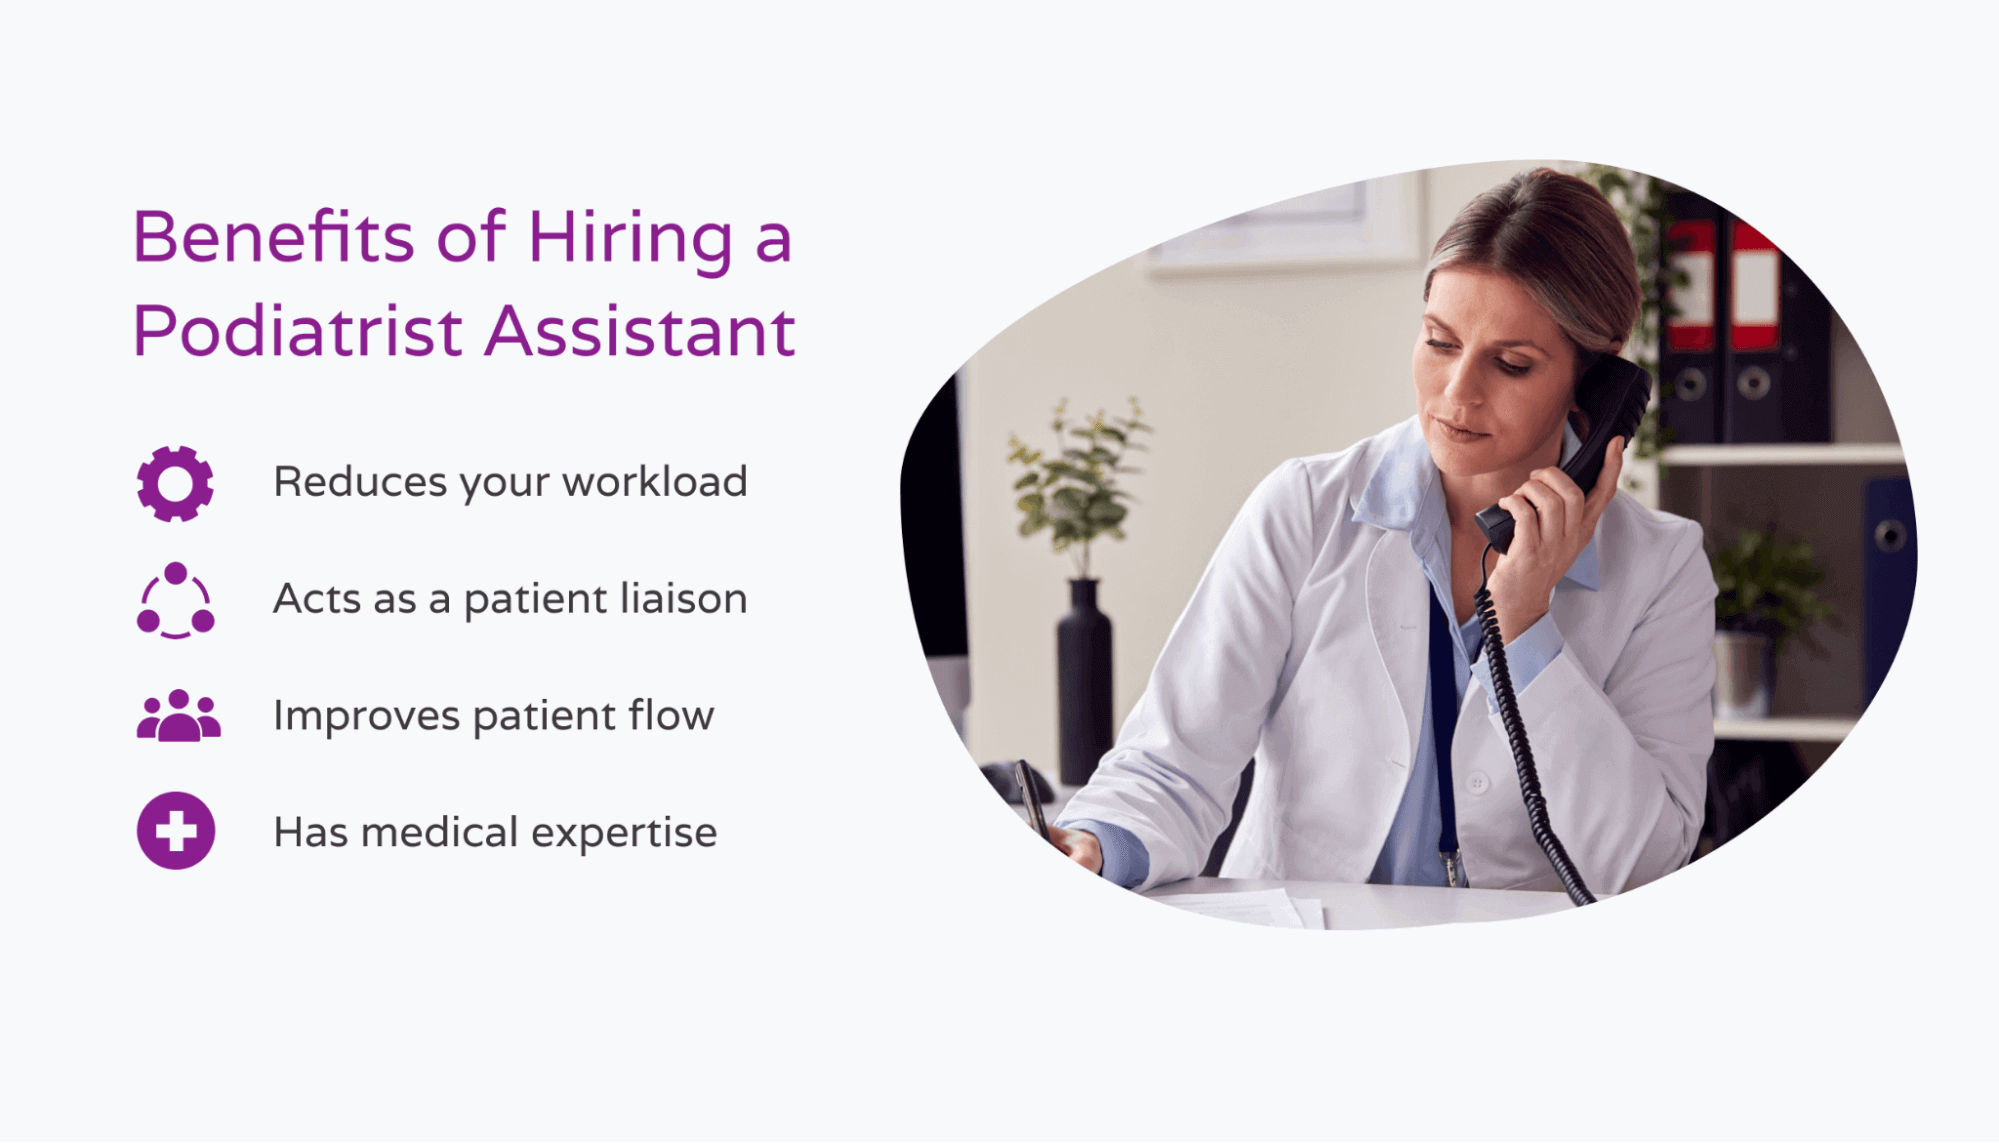 Benefits of hiring podiatrist assistant